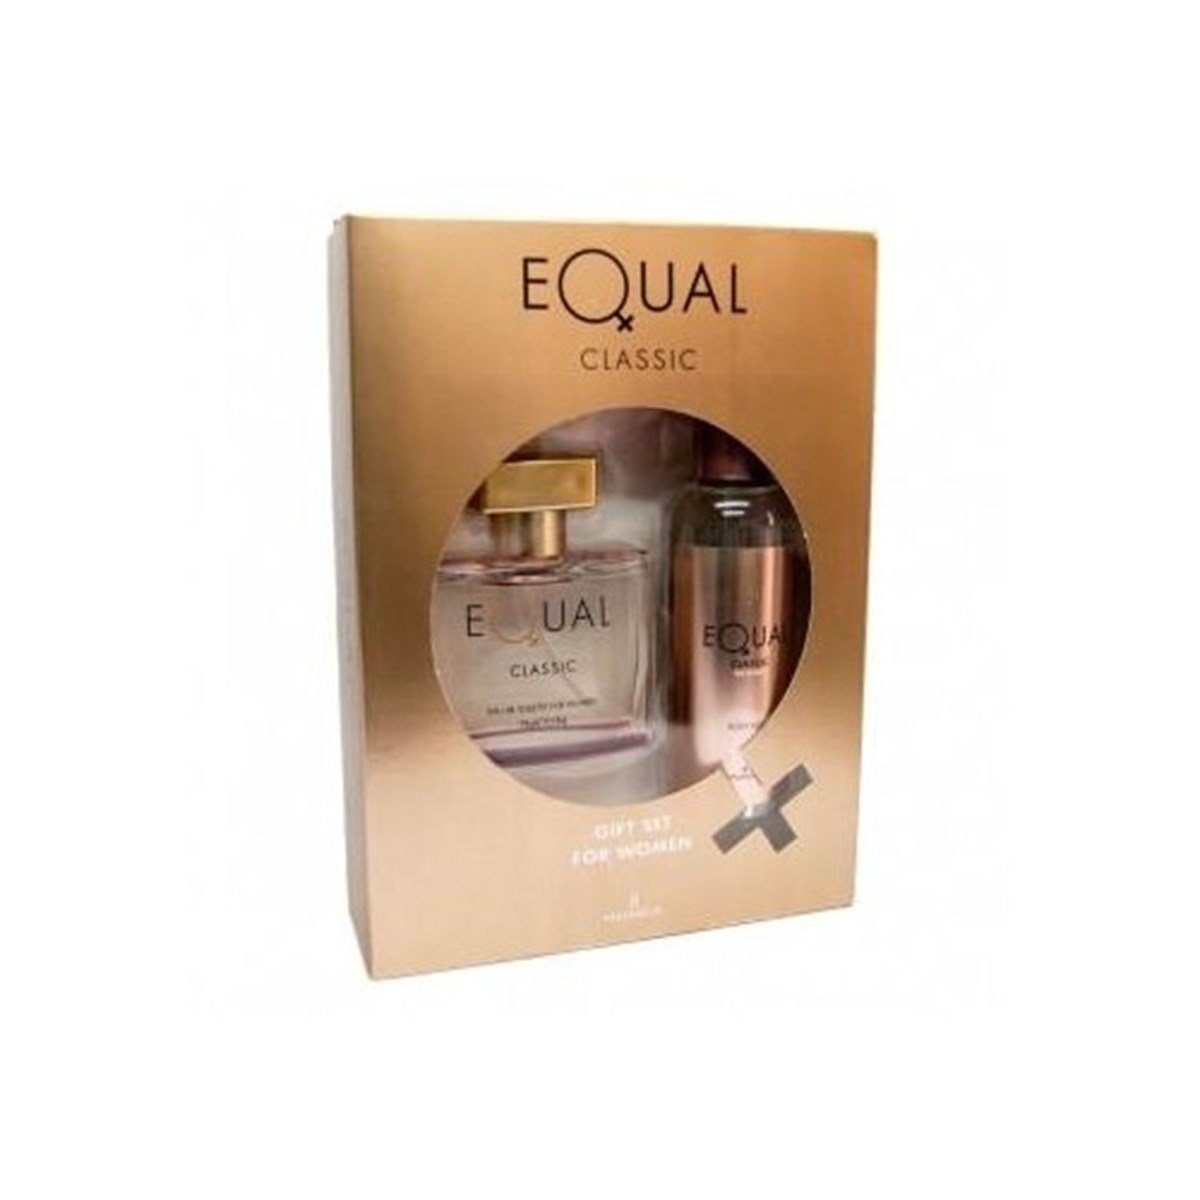 EQUAL CLASSIC Kadın Edt 75 ml + Deodorant 150 ml Kadın Parfüm Seti | Farma  Ucuz